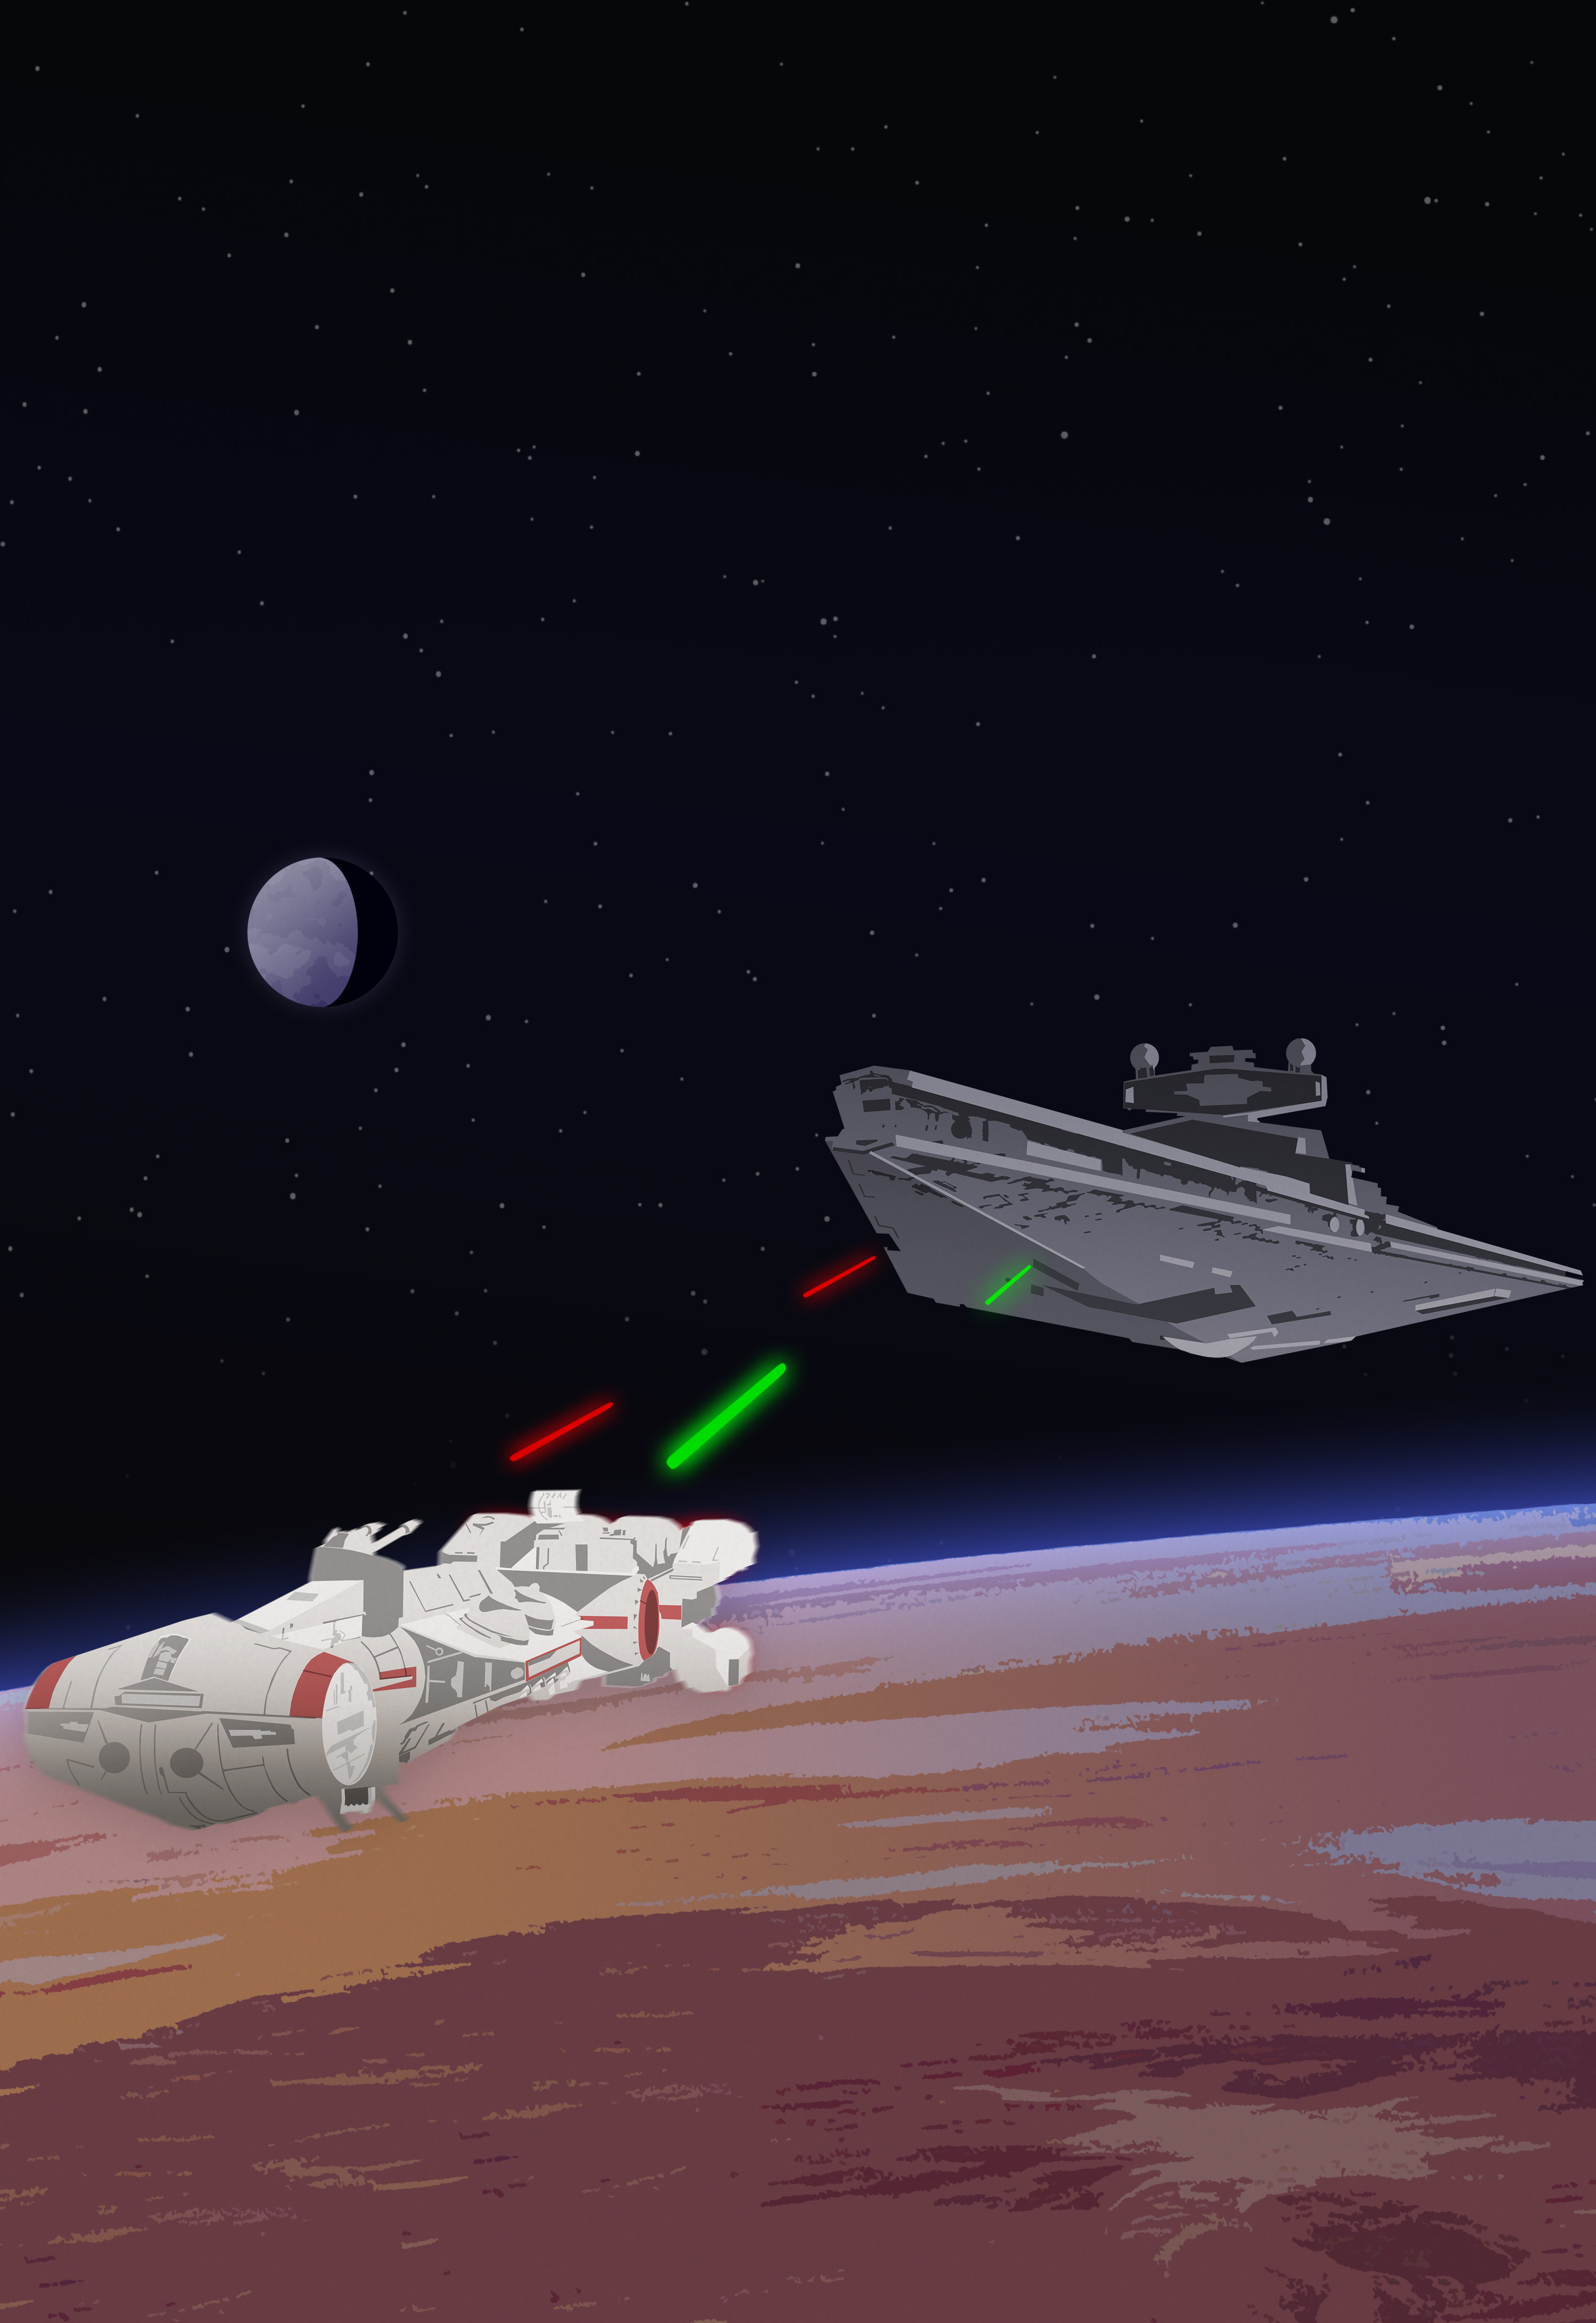 Star Wars: Space Battle para ROBLOX - Jogo Download